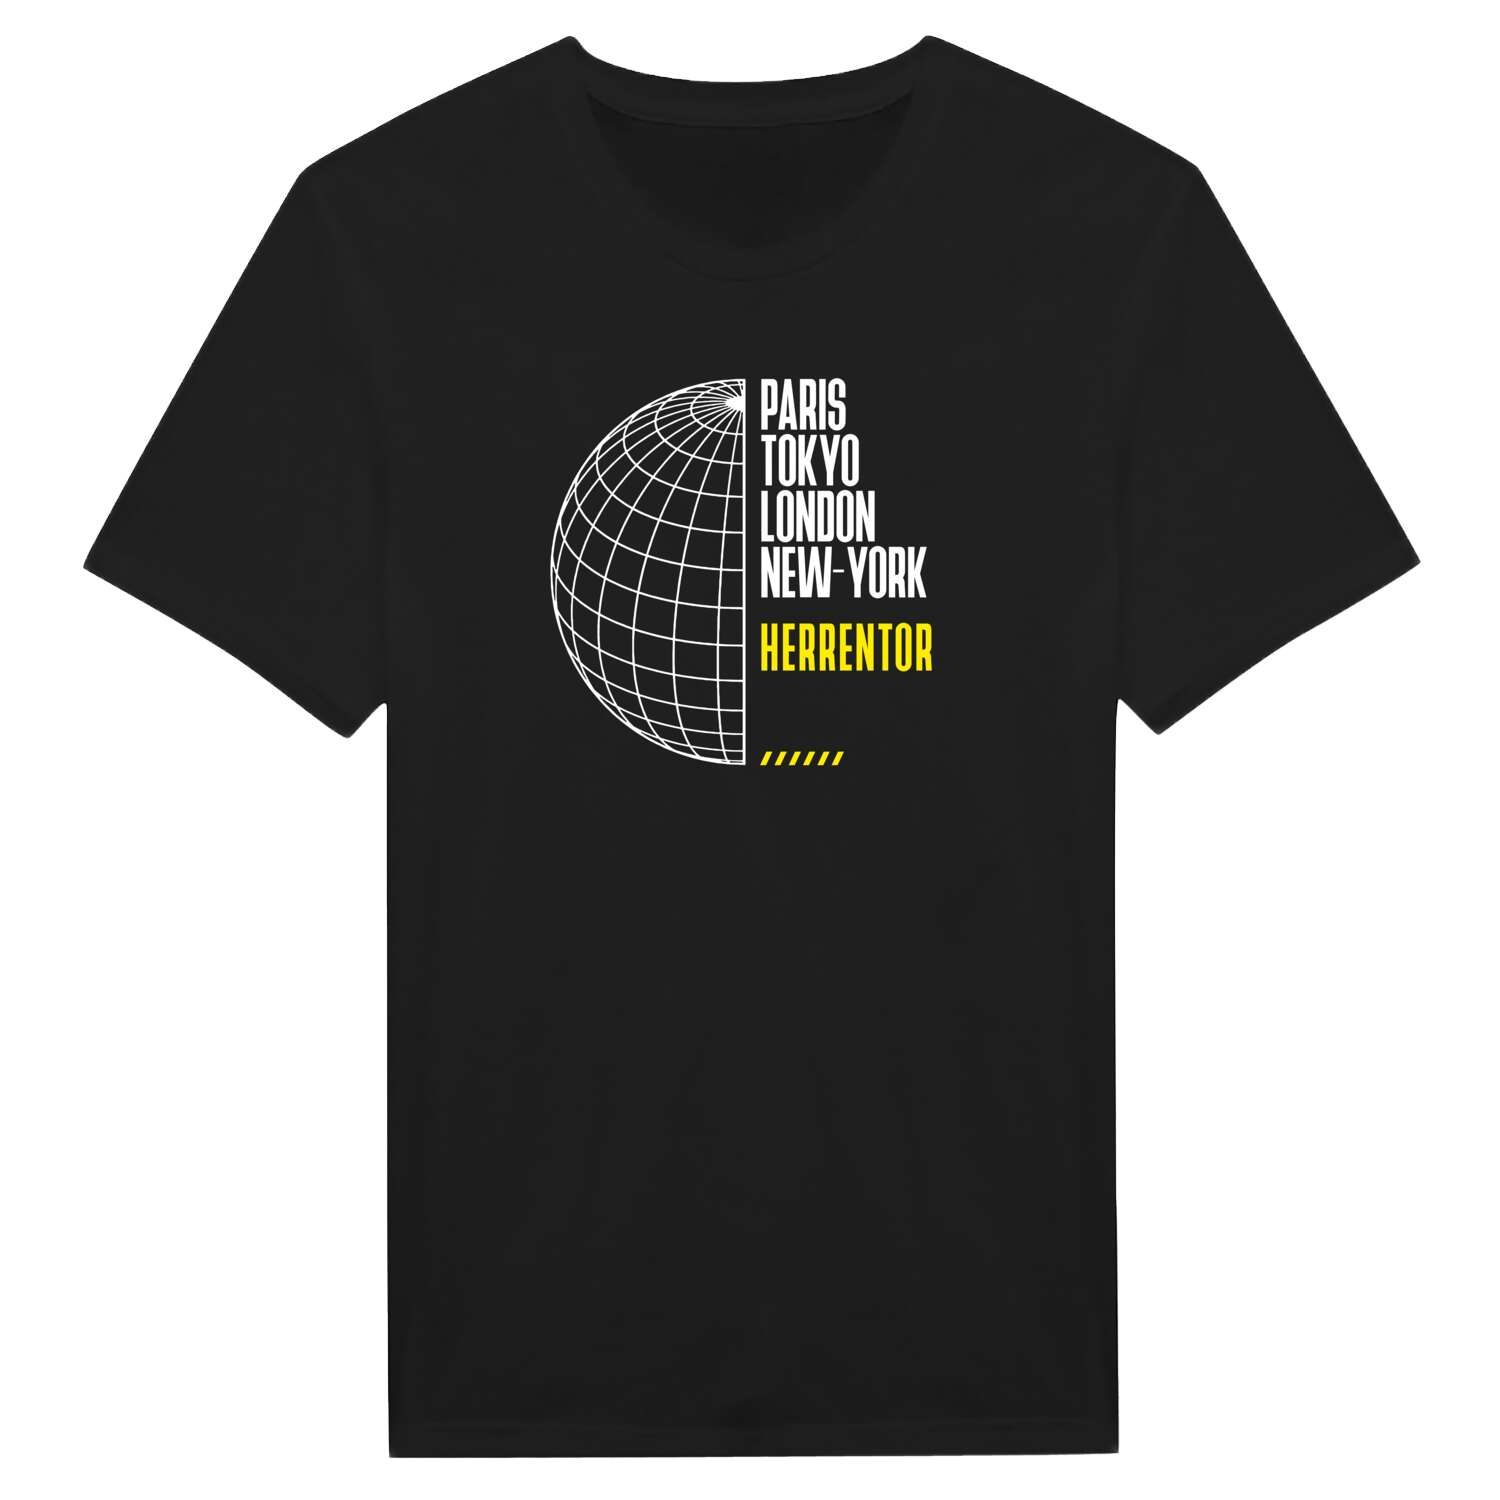 Herrentor T-Shirt »Paris Tokyo London«